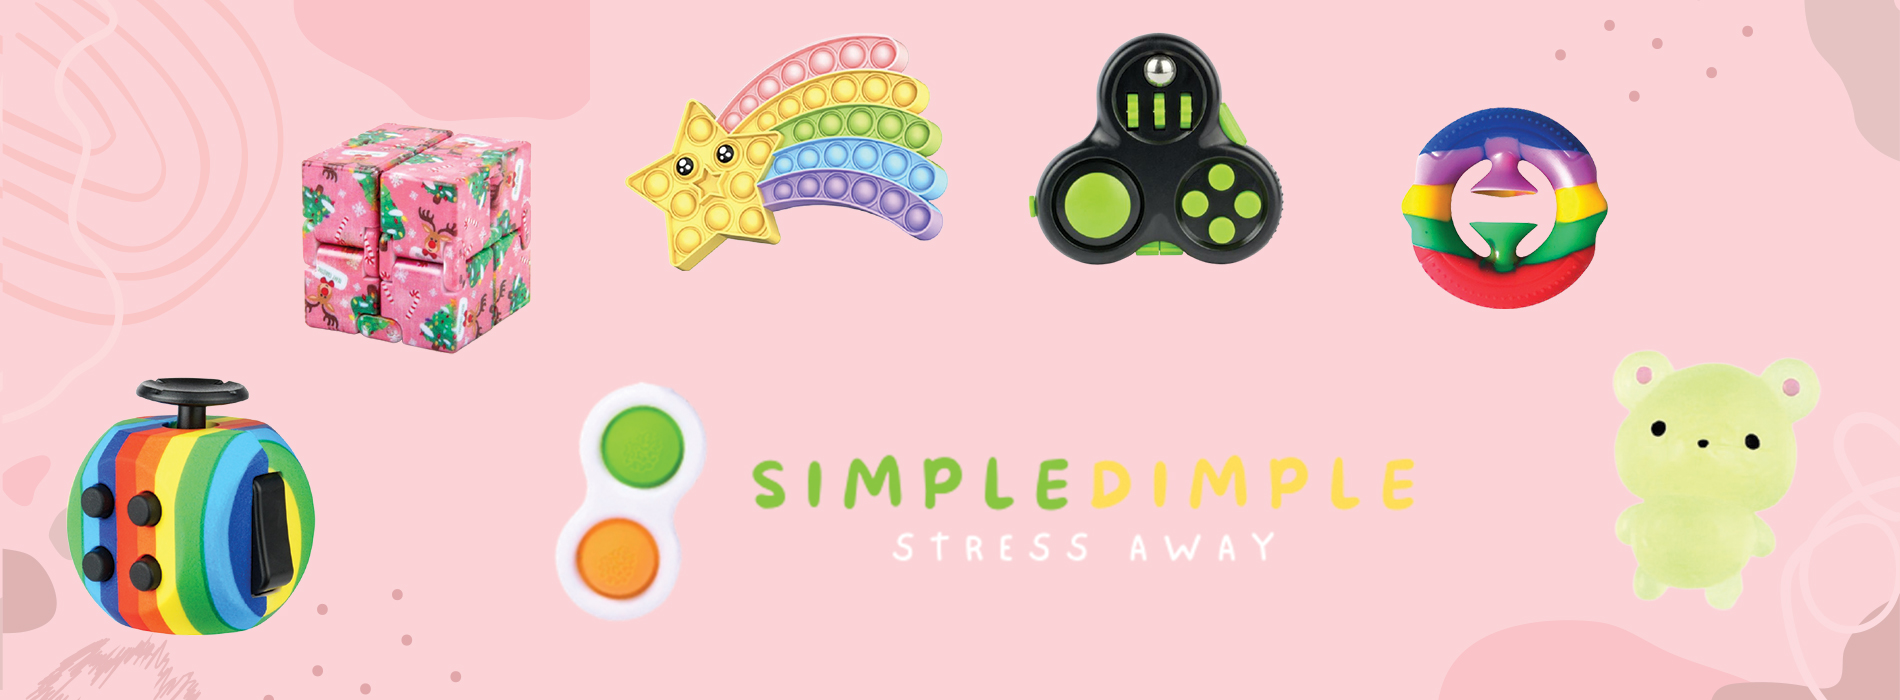 Autism Fidget Toys CEINUMBAL Fidget Toys Simple Dimple Fidget Packs Anxiety Relief Toys ADHD Rehabilitation Training Toys 4 Colors Round 